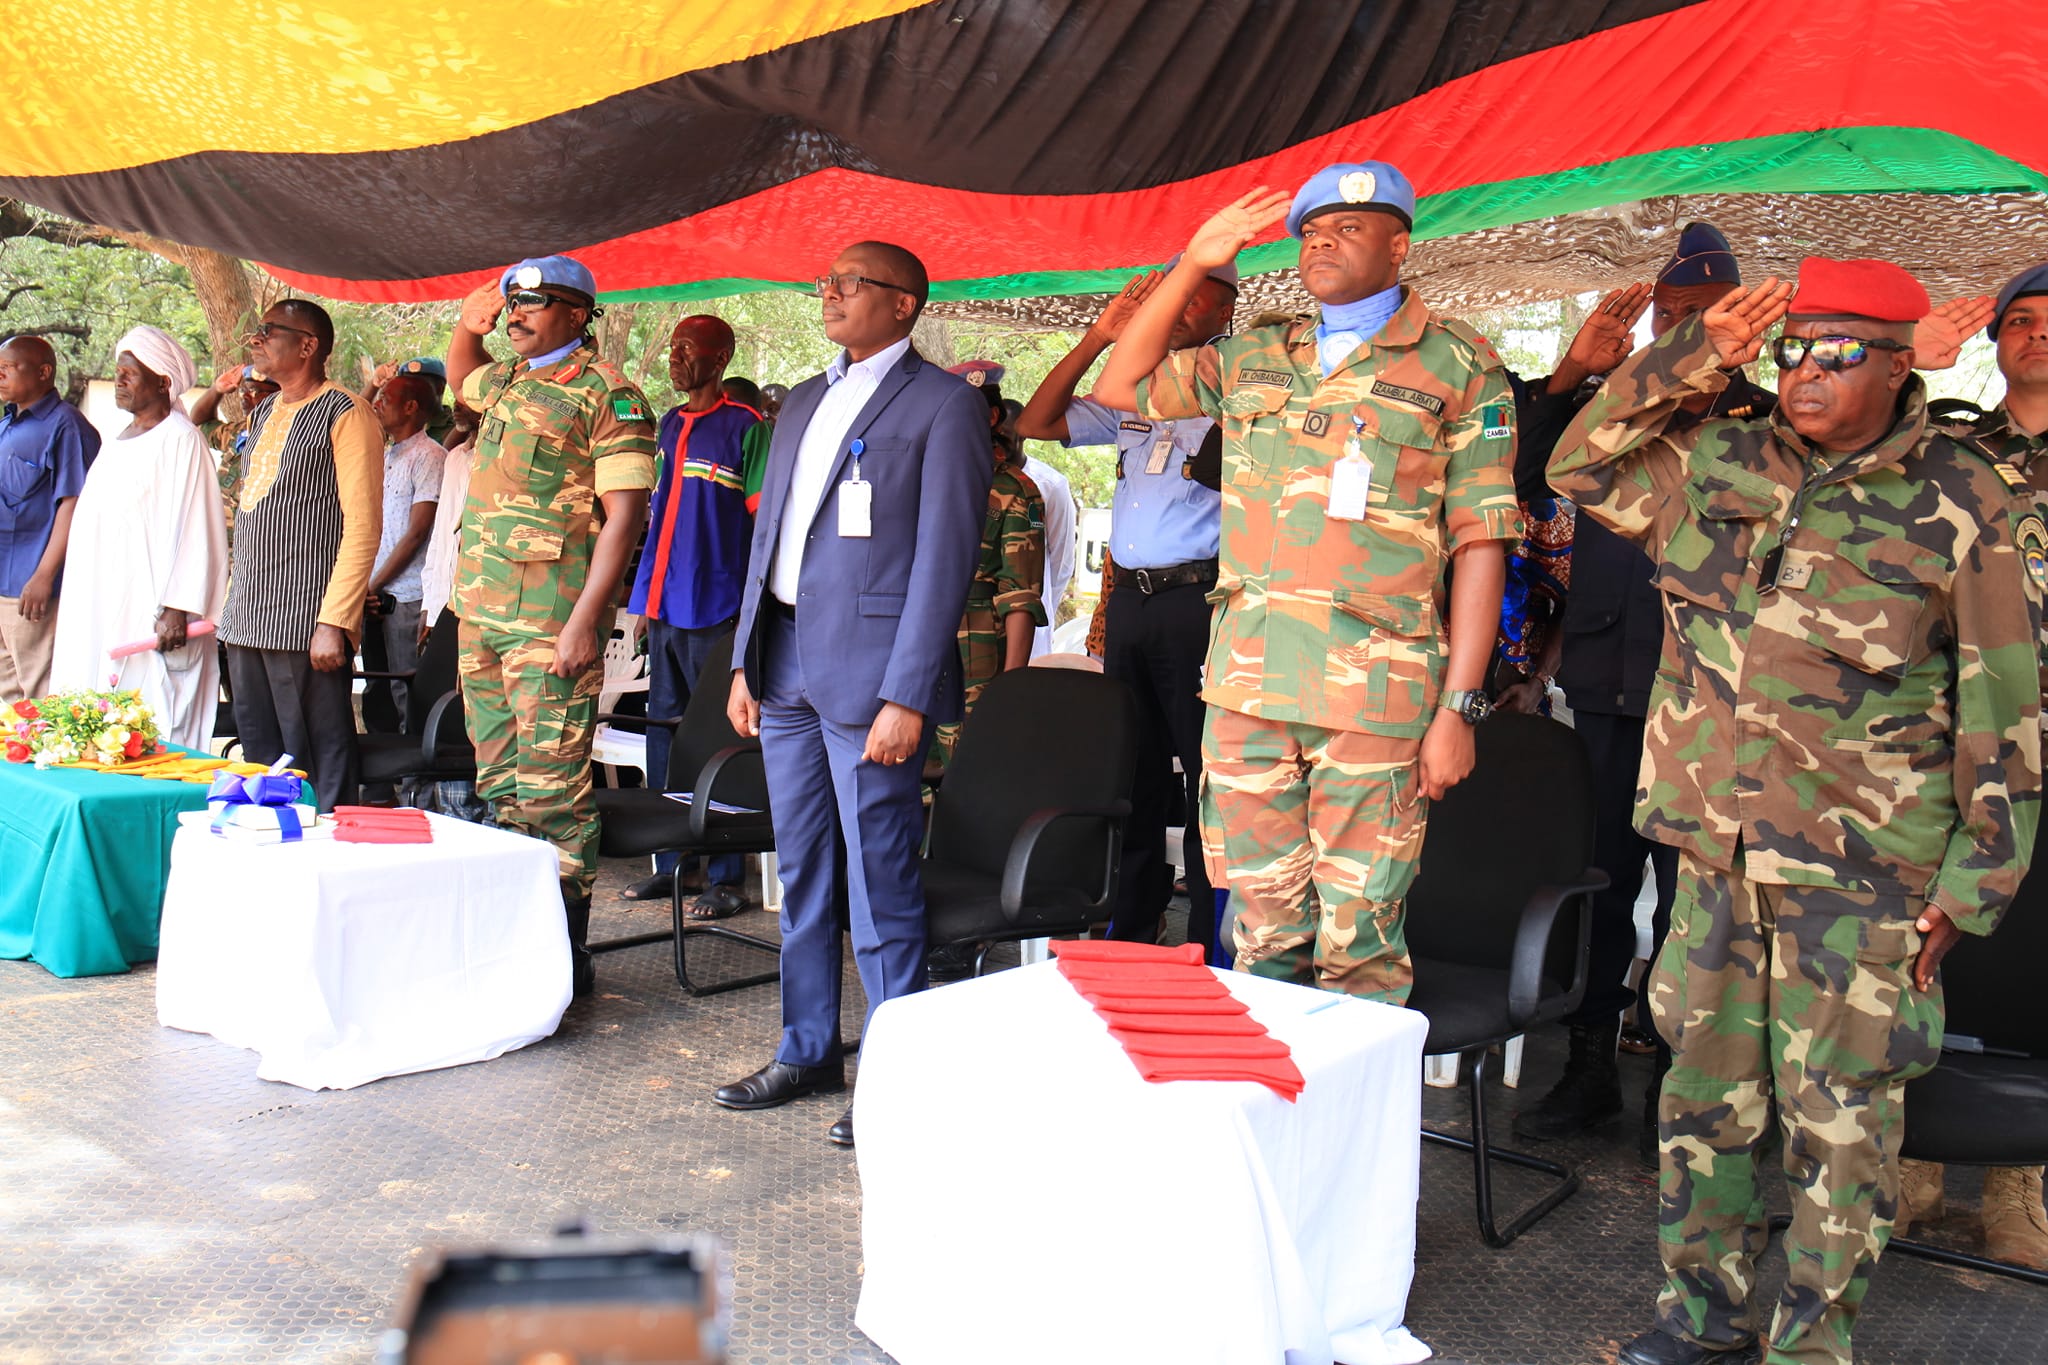 Photos: The Zambia Army